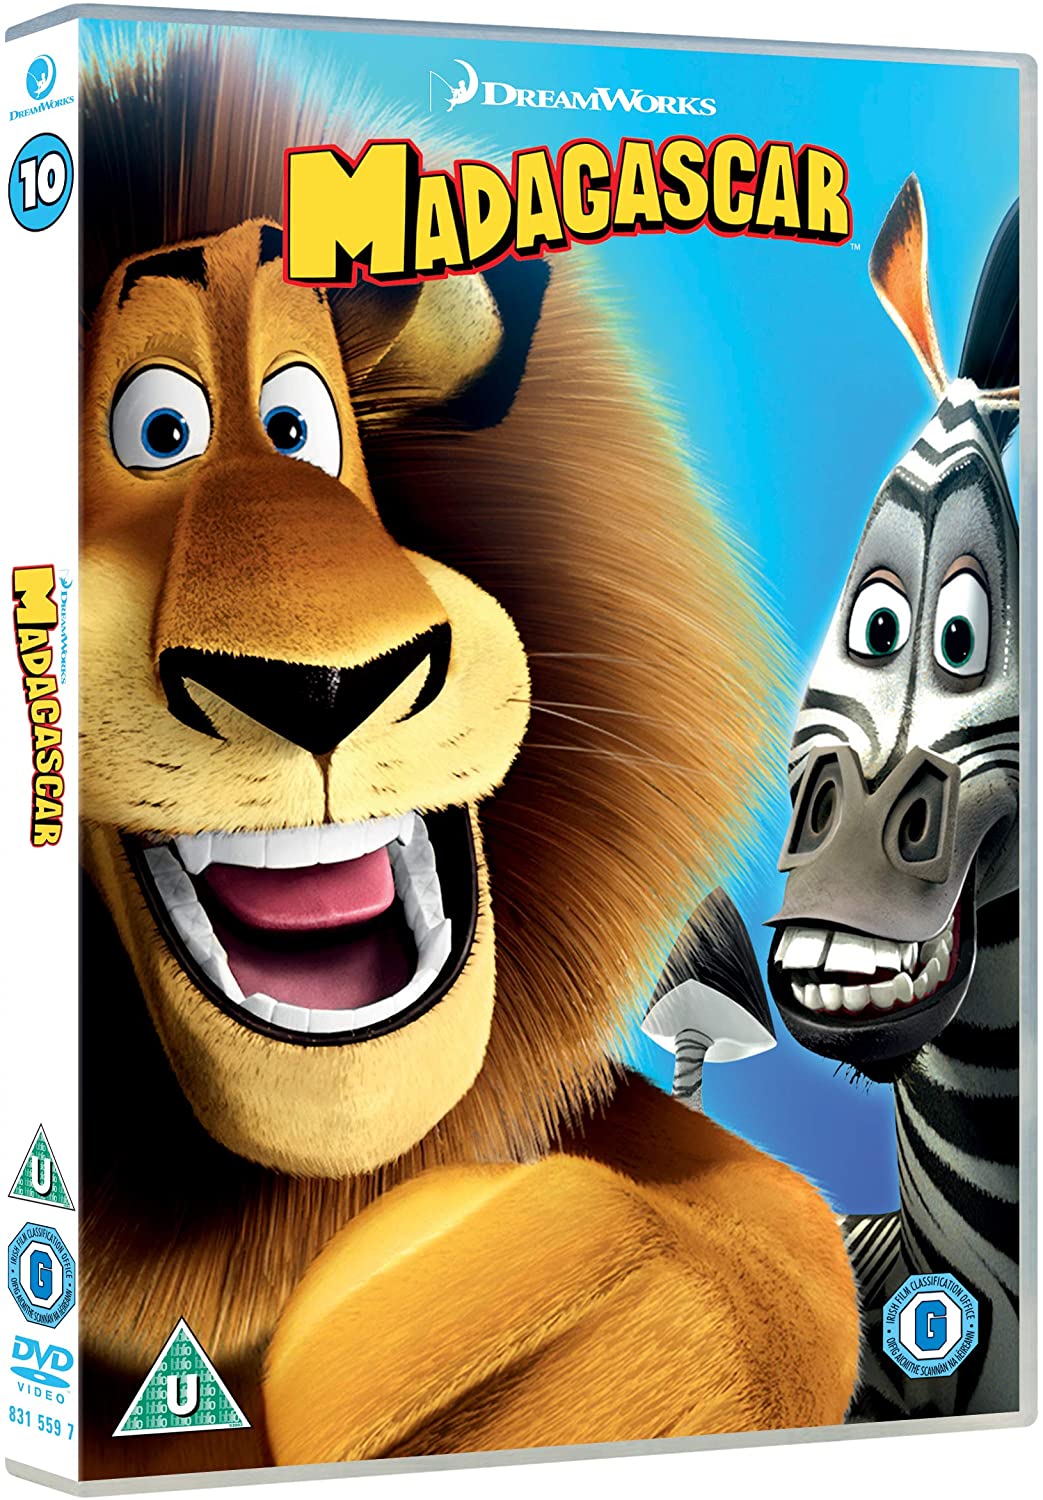 Madagascar [2005] (Dreamworks) (DVD)